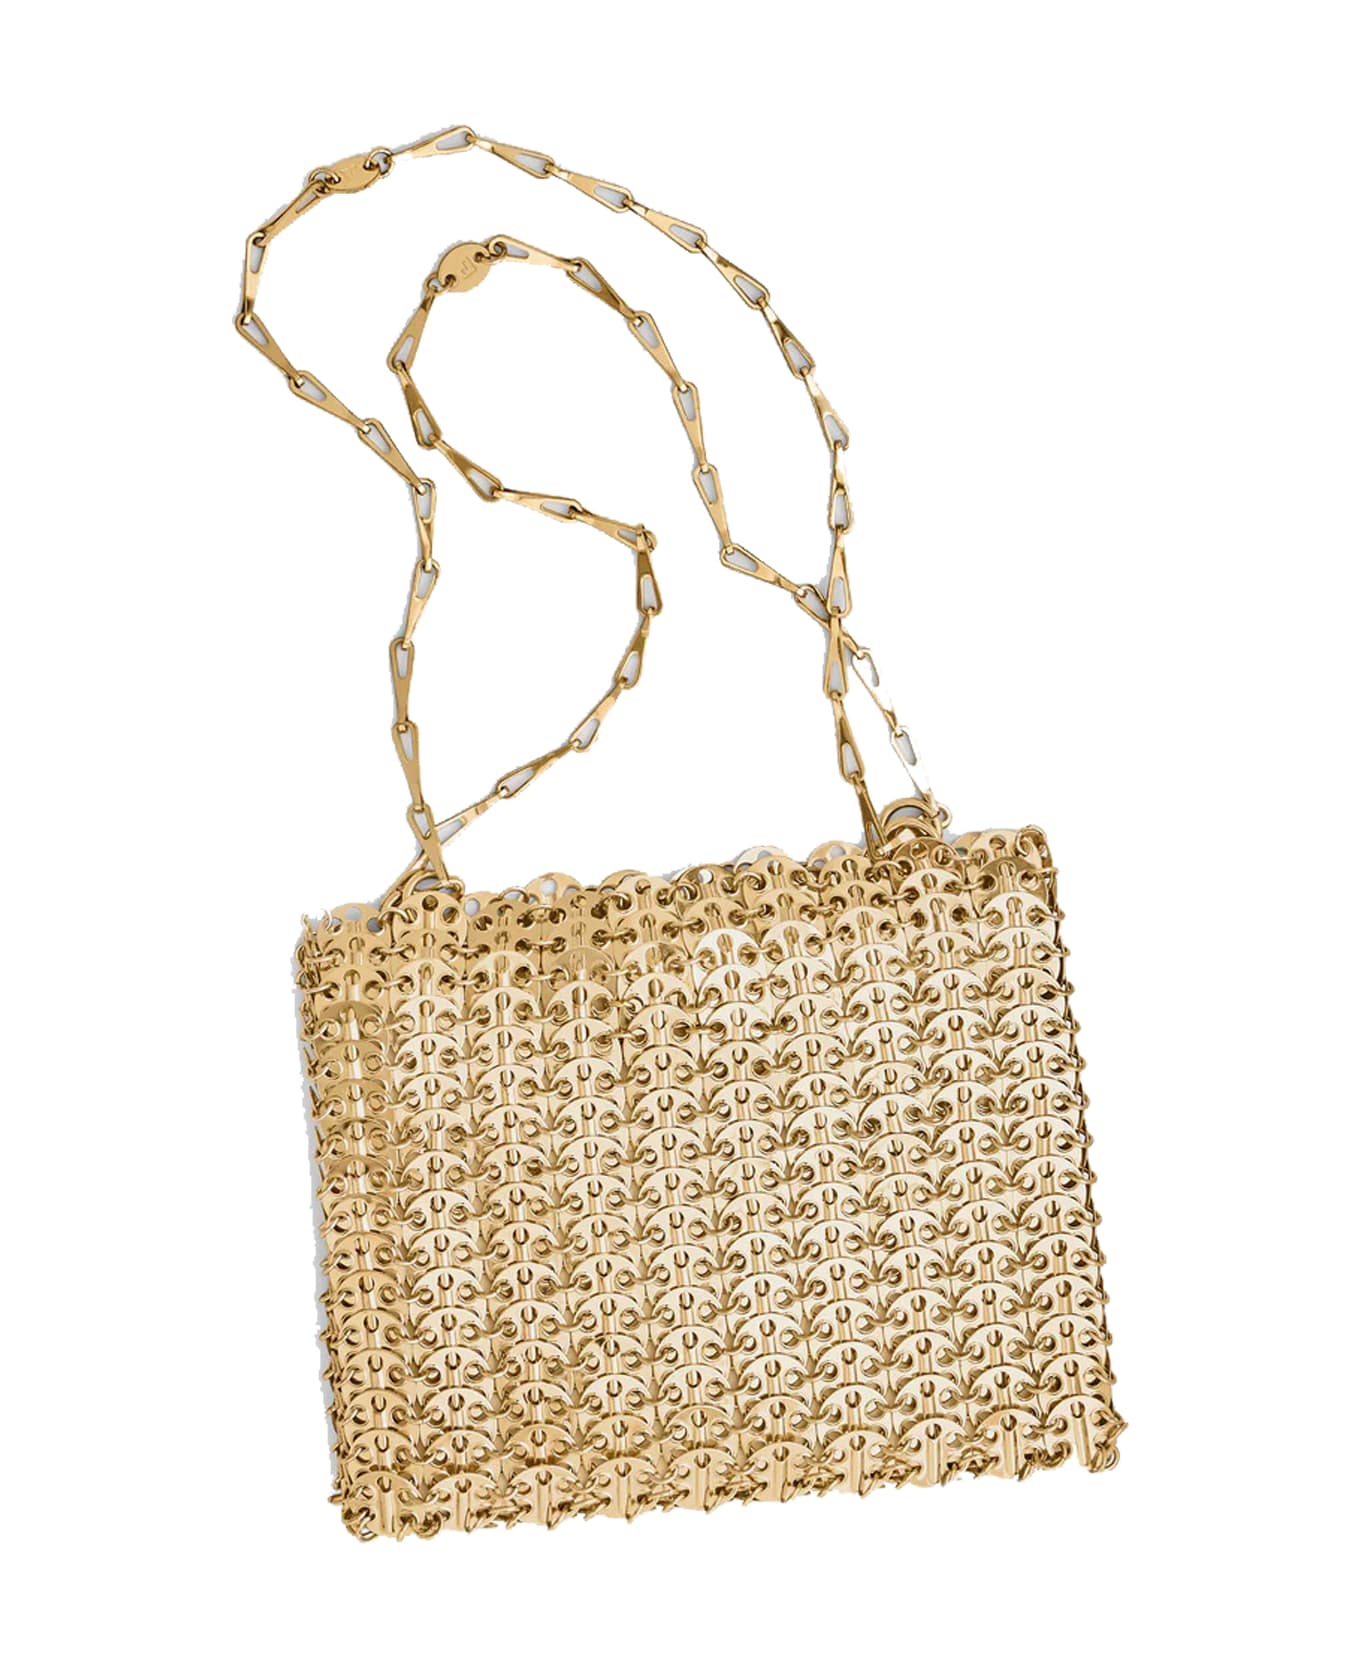 Paco Rabanne Handbags - Golden